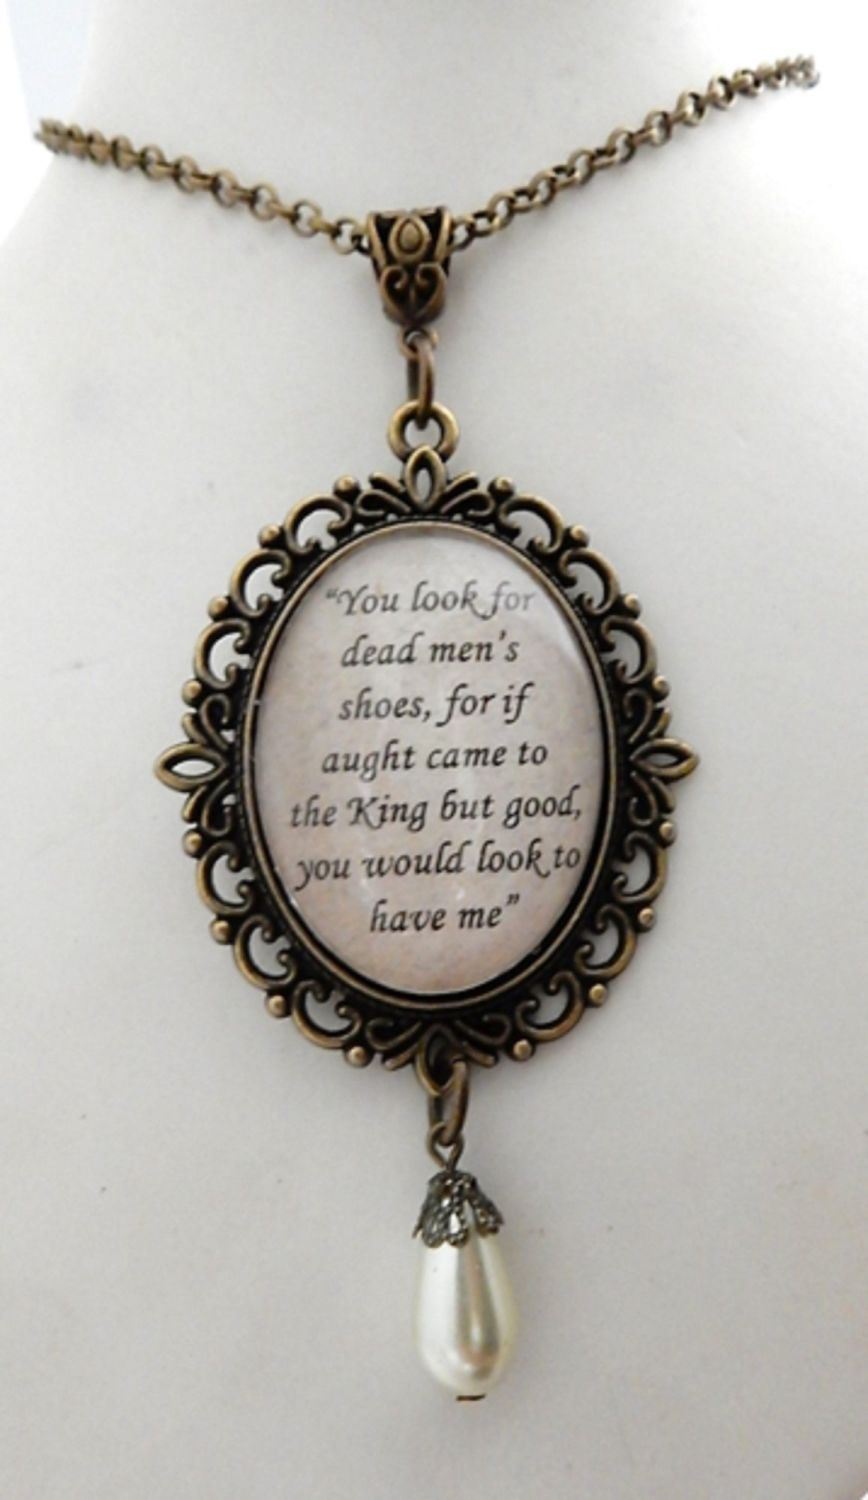 Queen Anne Boleyn Sir Henry Norris quote necklace